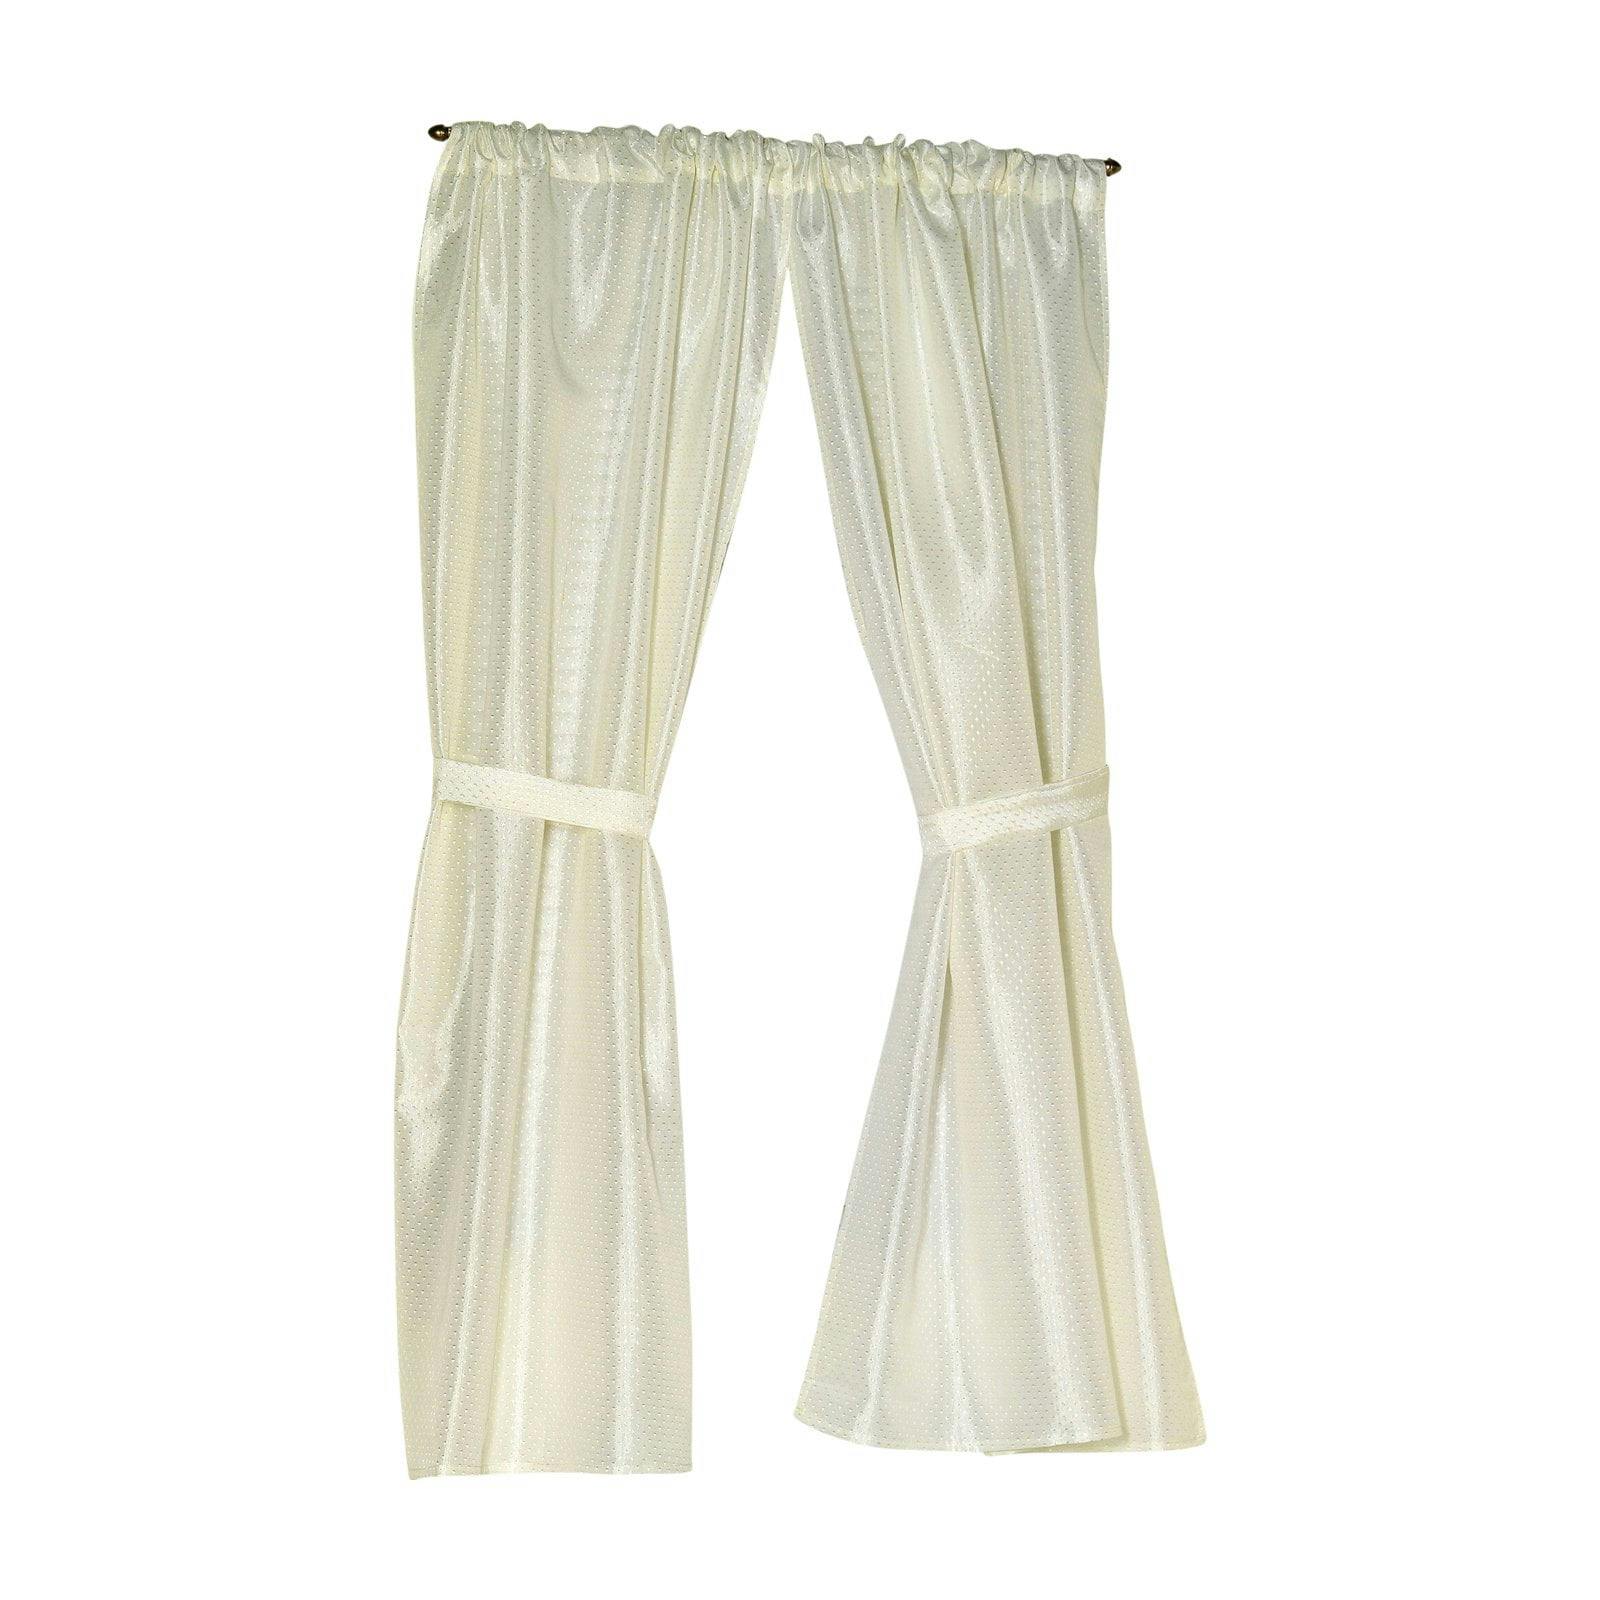 Elegant Ivory Diamond-Piqued Polyester Window Curtain 54"L x 34"W